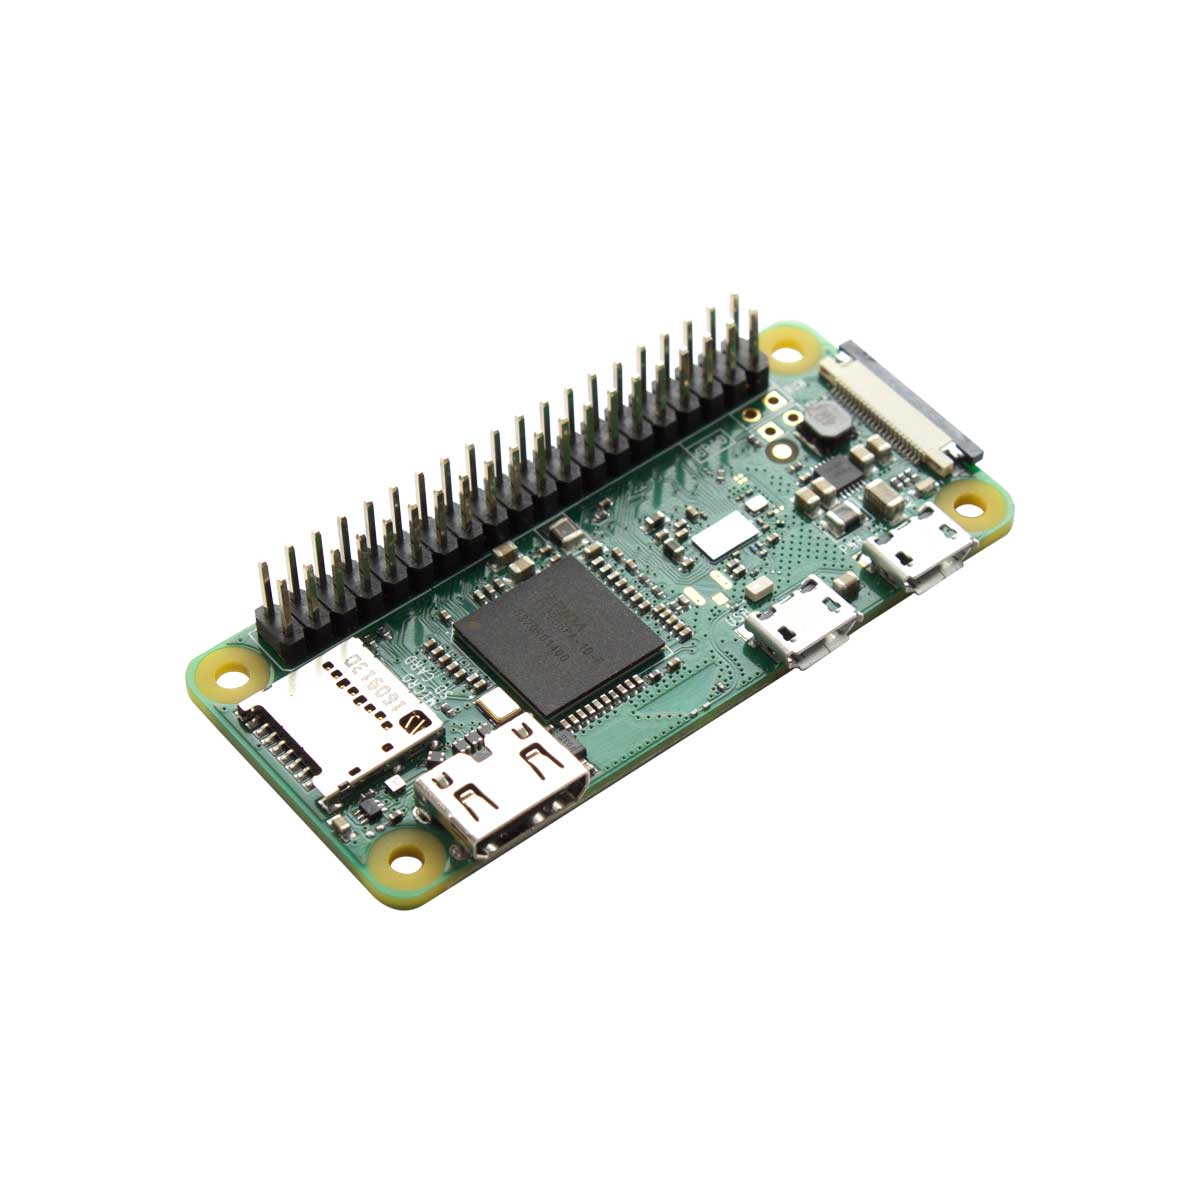 Raspberry Pi Zero WH (Zero W with Headers) : ID 3708 : $16.00